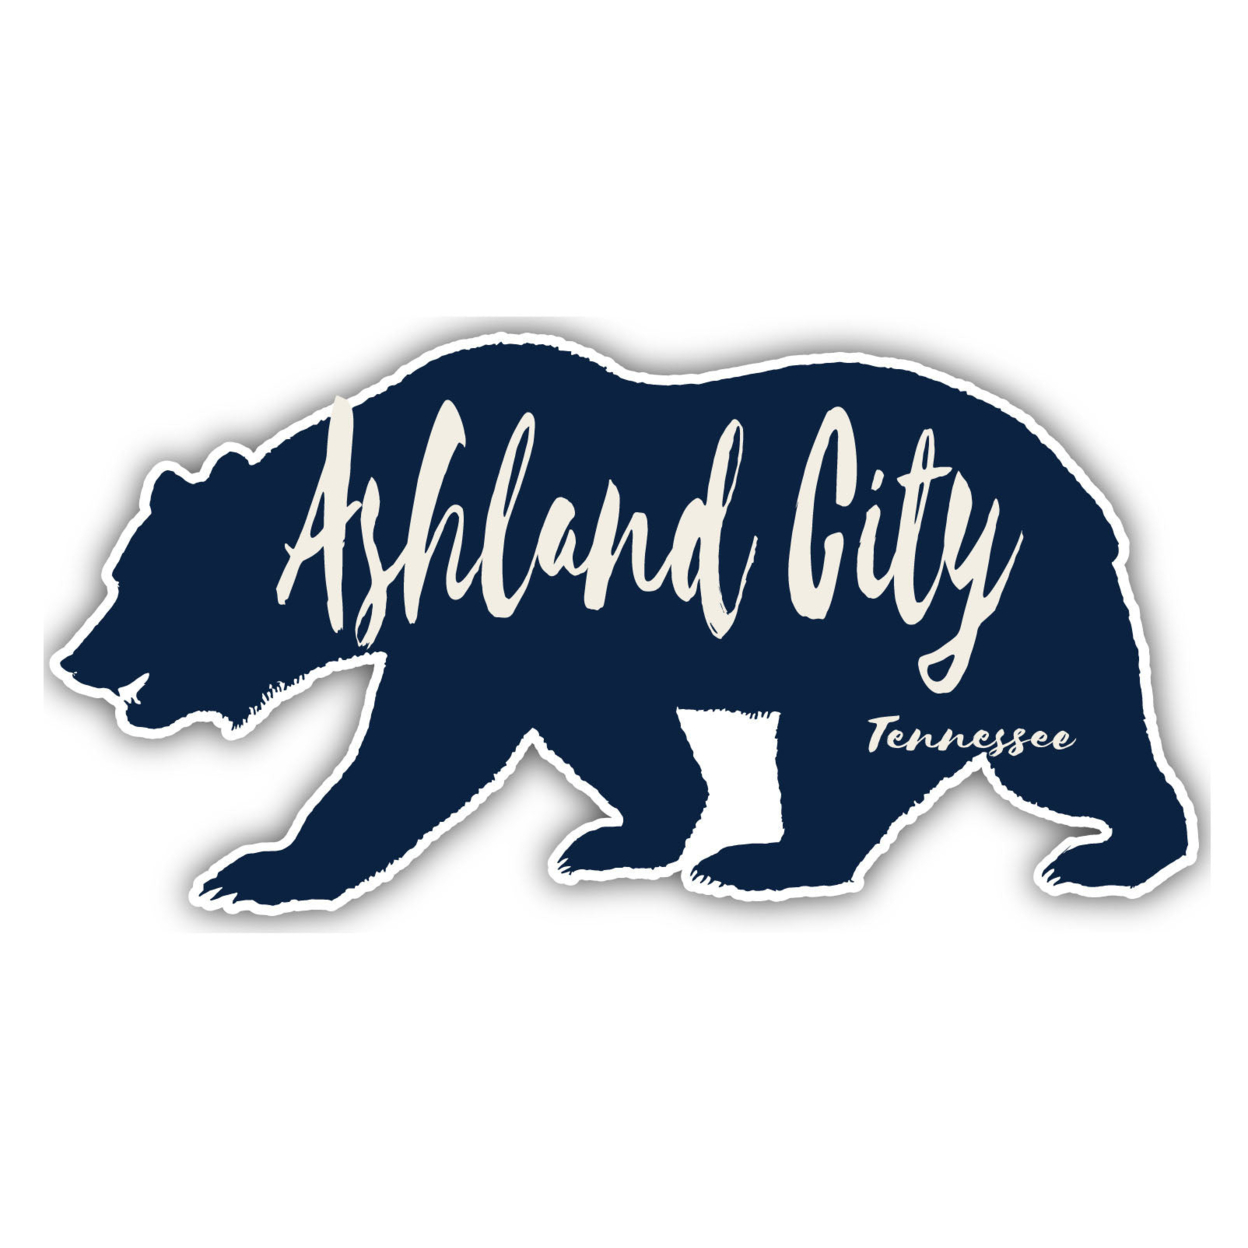 Ashland City Tennessee Souvenir Decorative Stickers (Choose Theme And Size) - Single Unit, 8-Inch, Bear